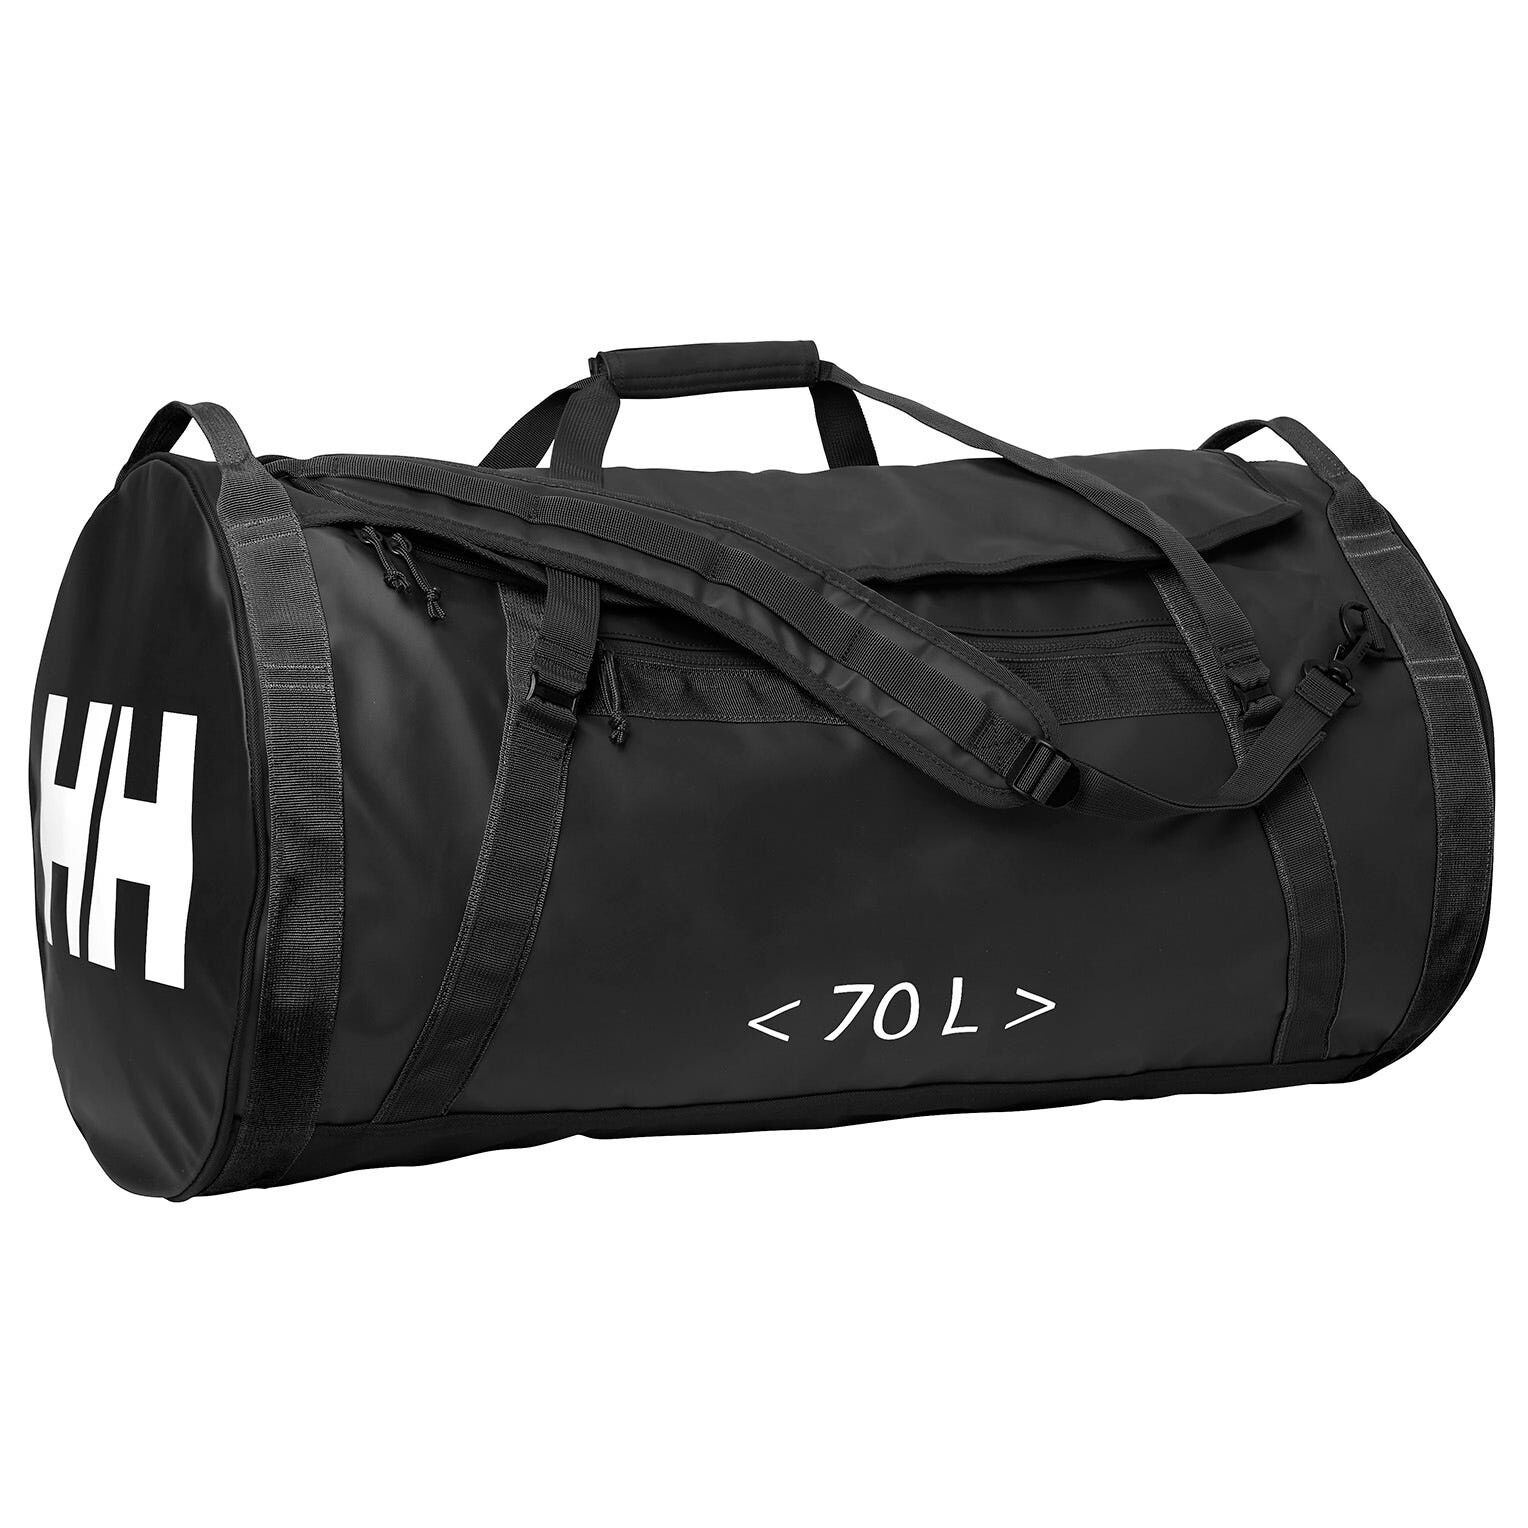 Helly Hansen HH Duffel Bag 2 70L - Travel bag